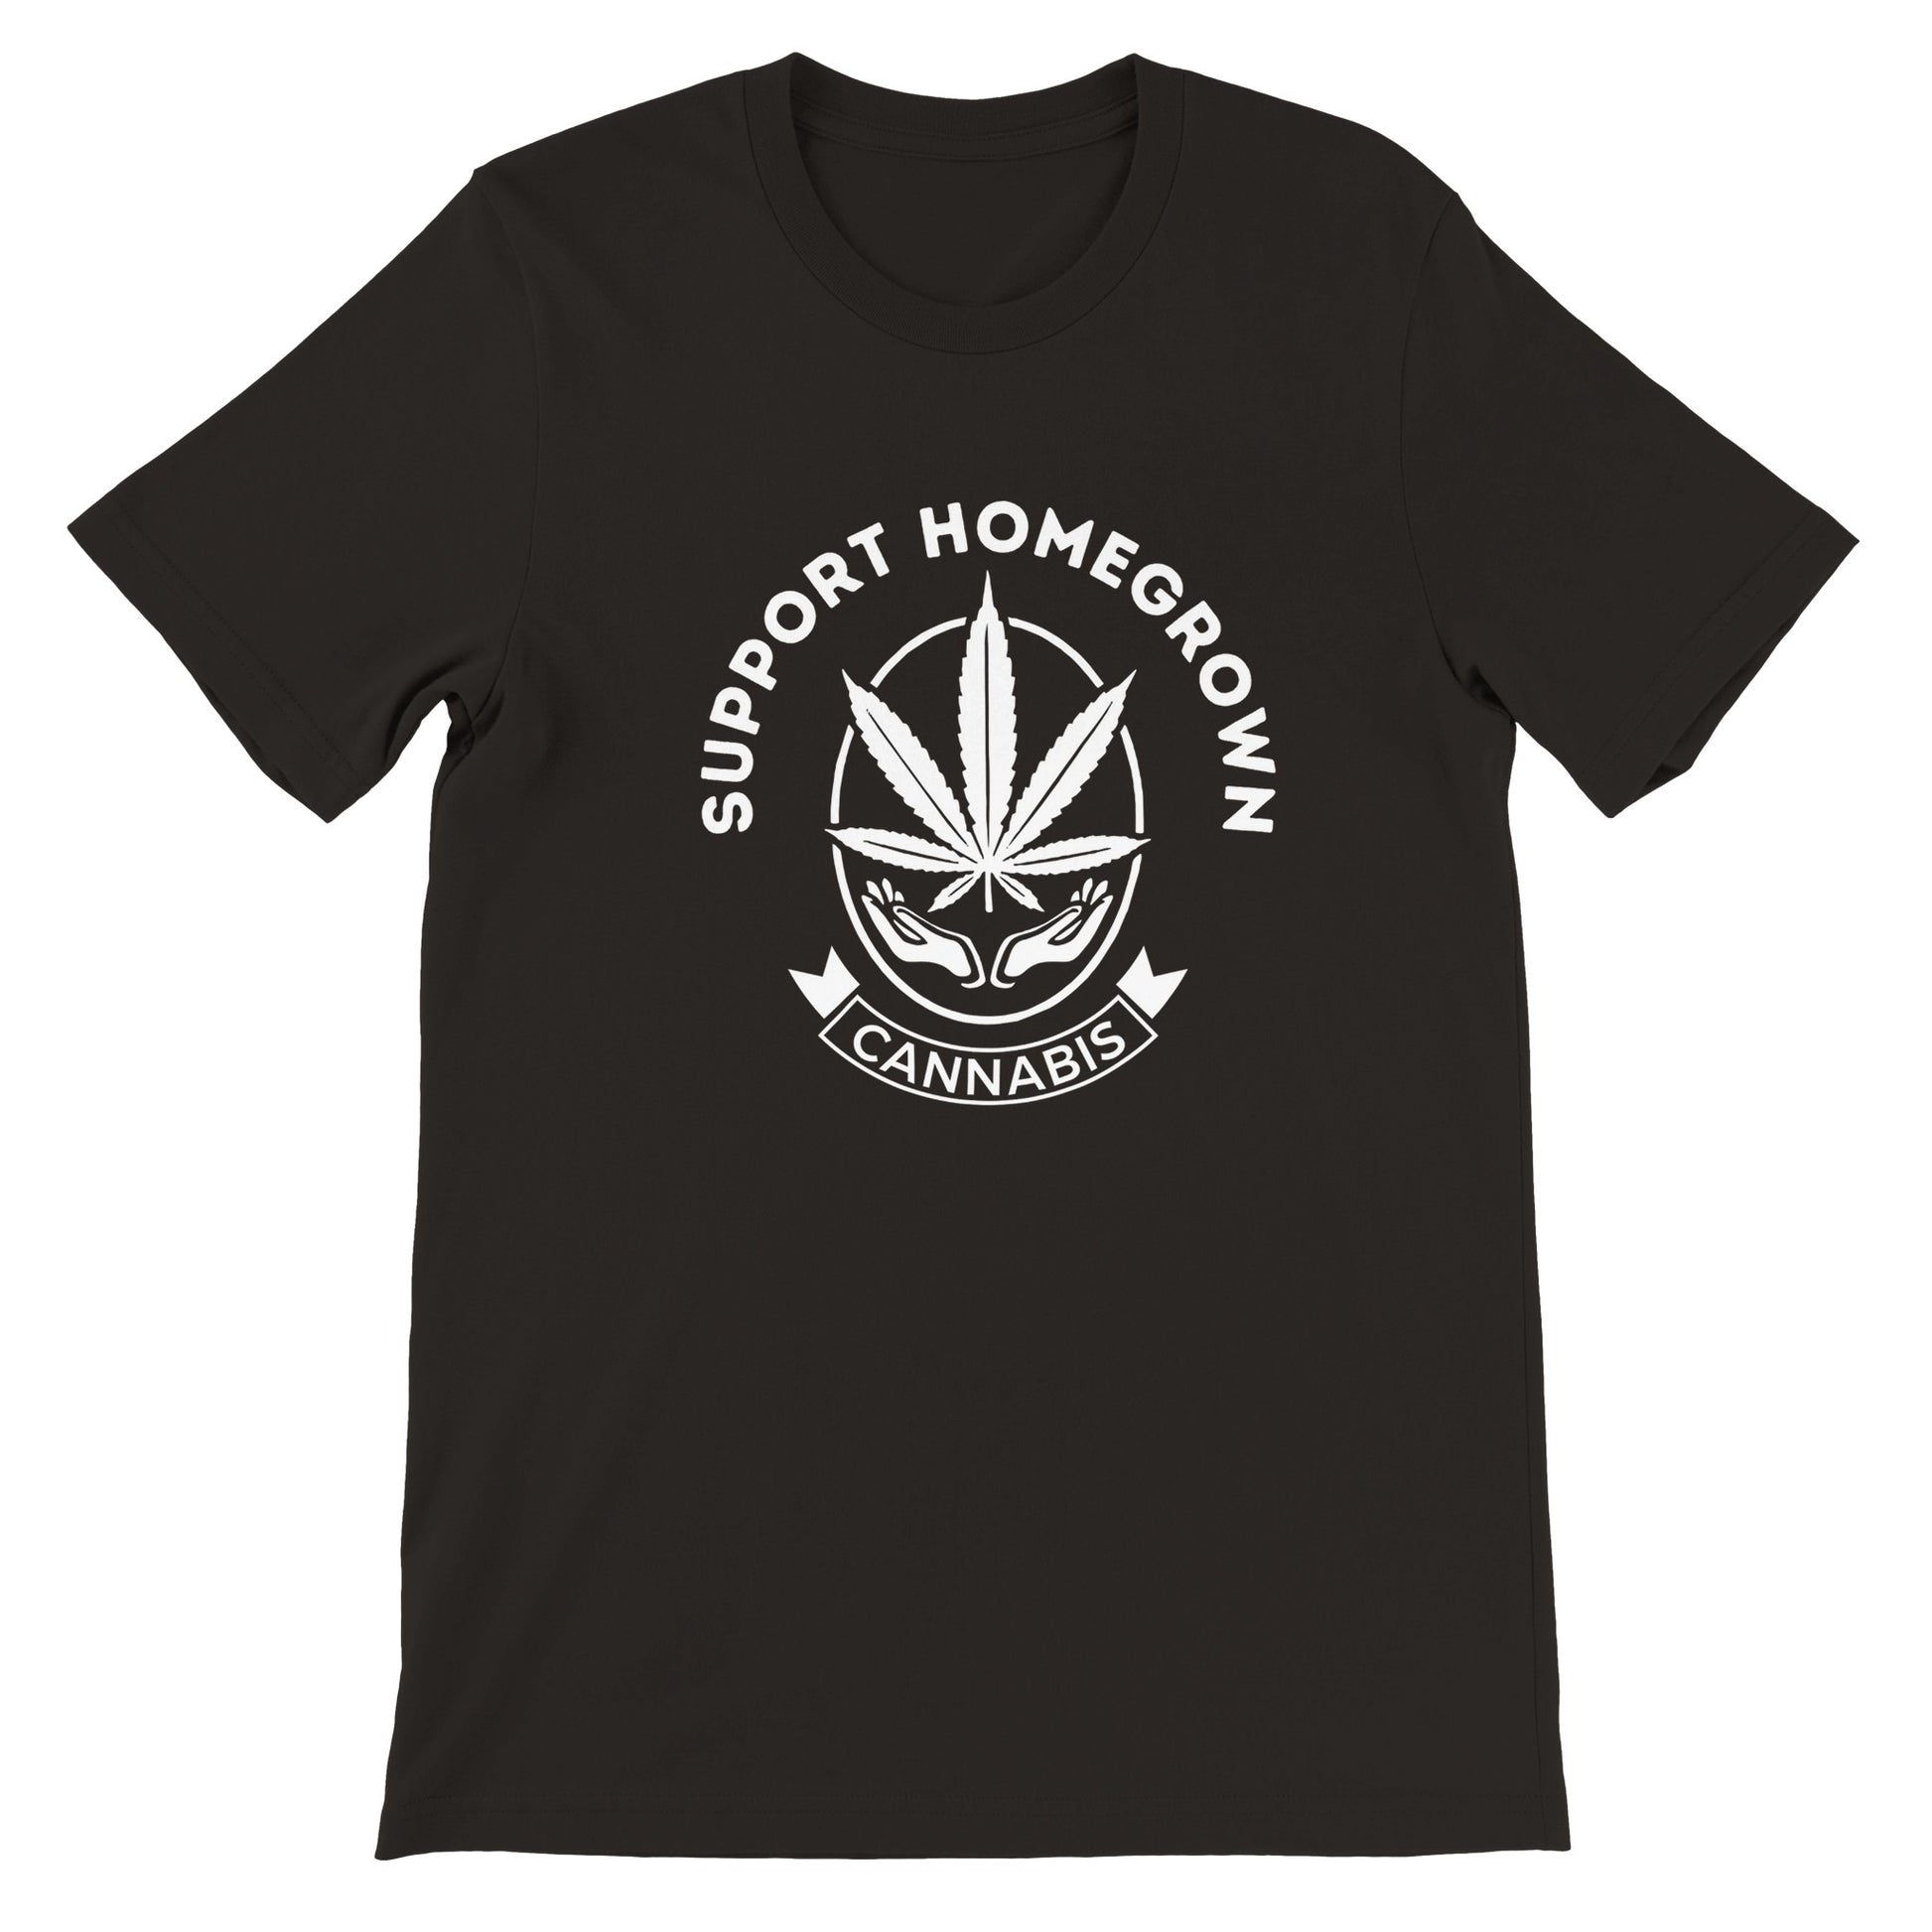 Support Homegrown Cannabis T-shirt dankweedtees